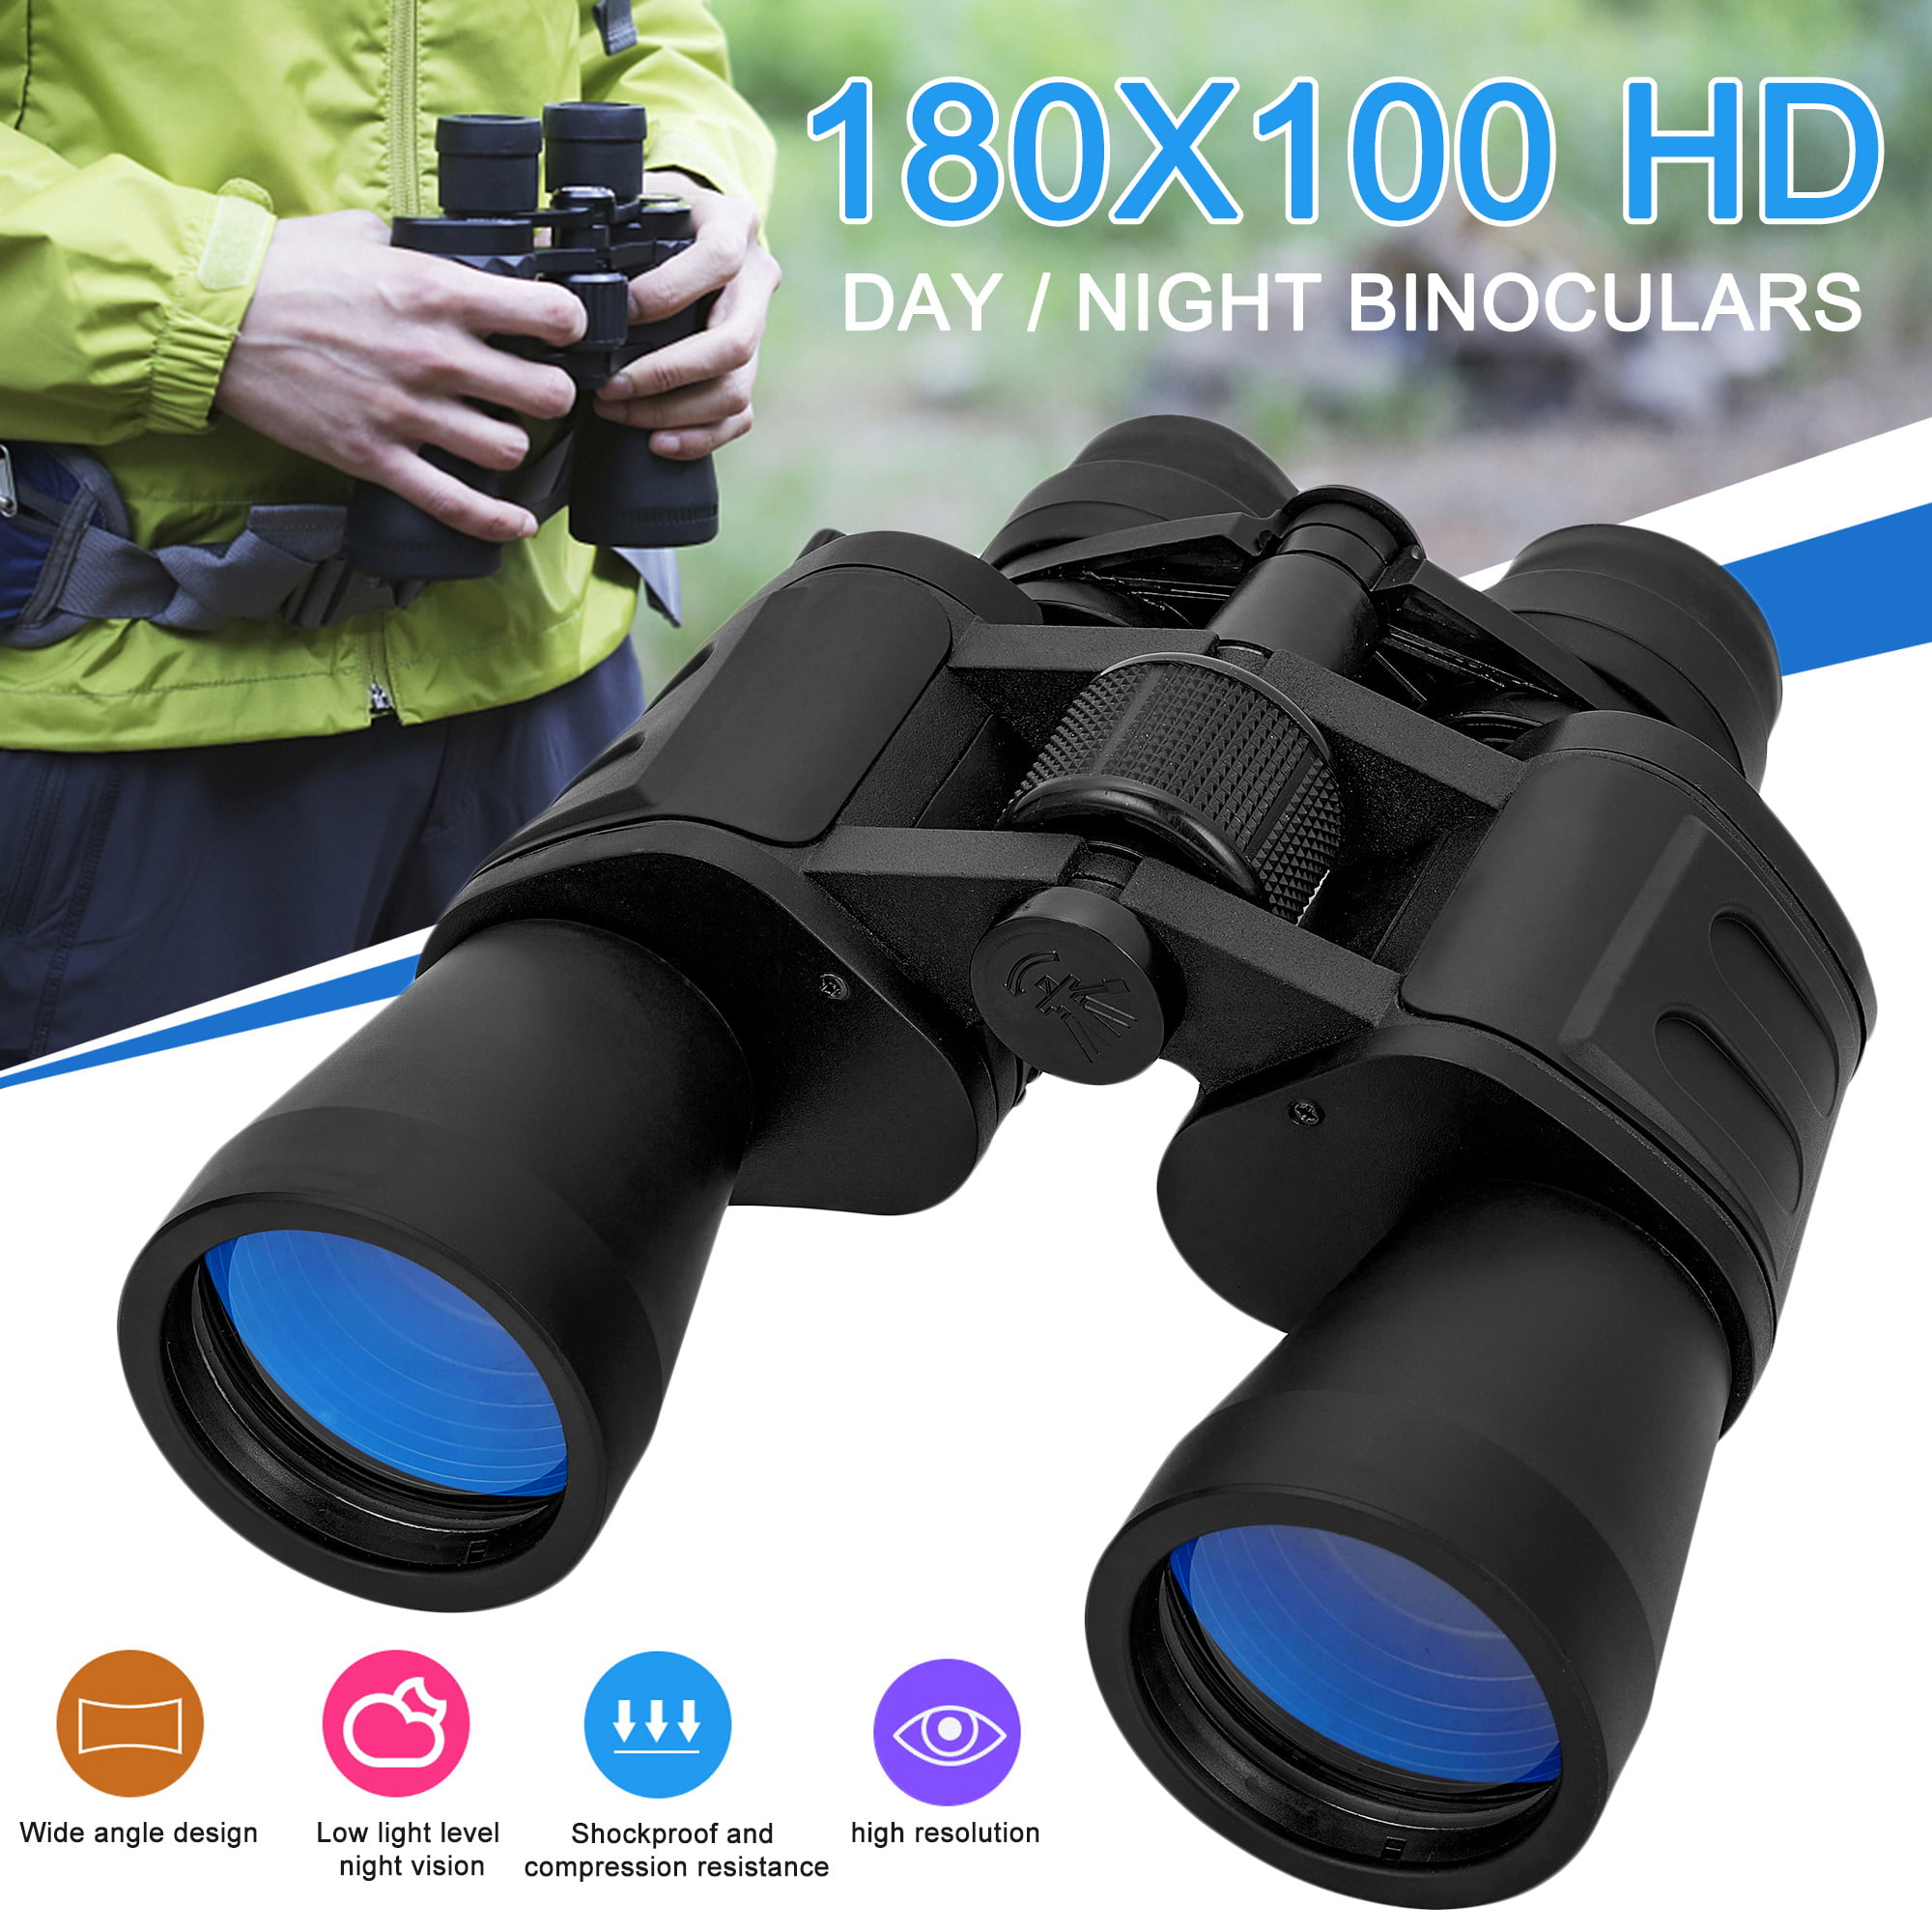 100x180 HD Binoculars Night Vision Telescope BAK4 Prism High Power W/Strap Bag 